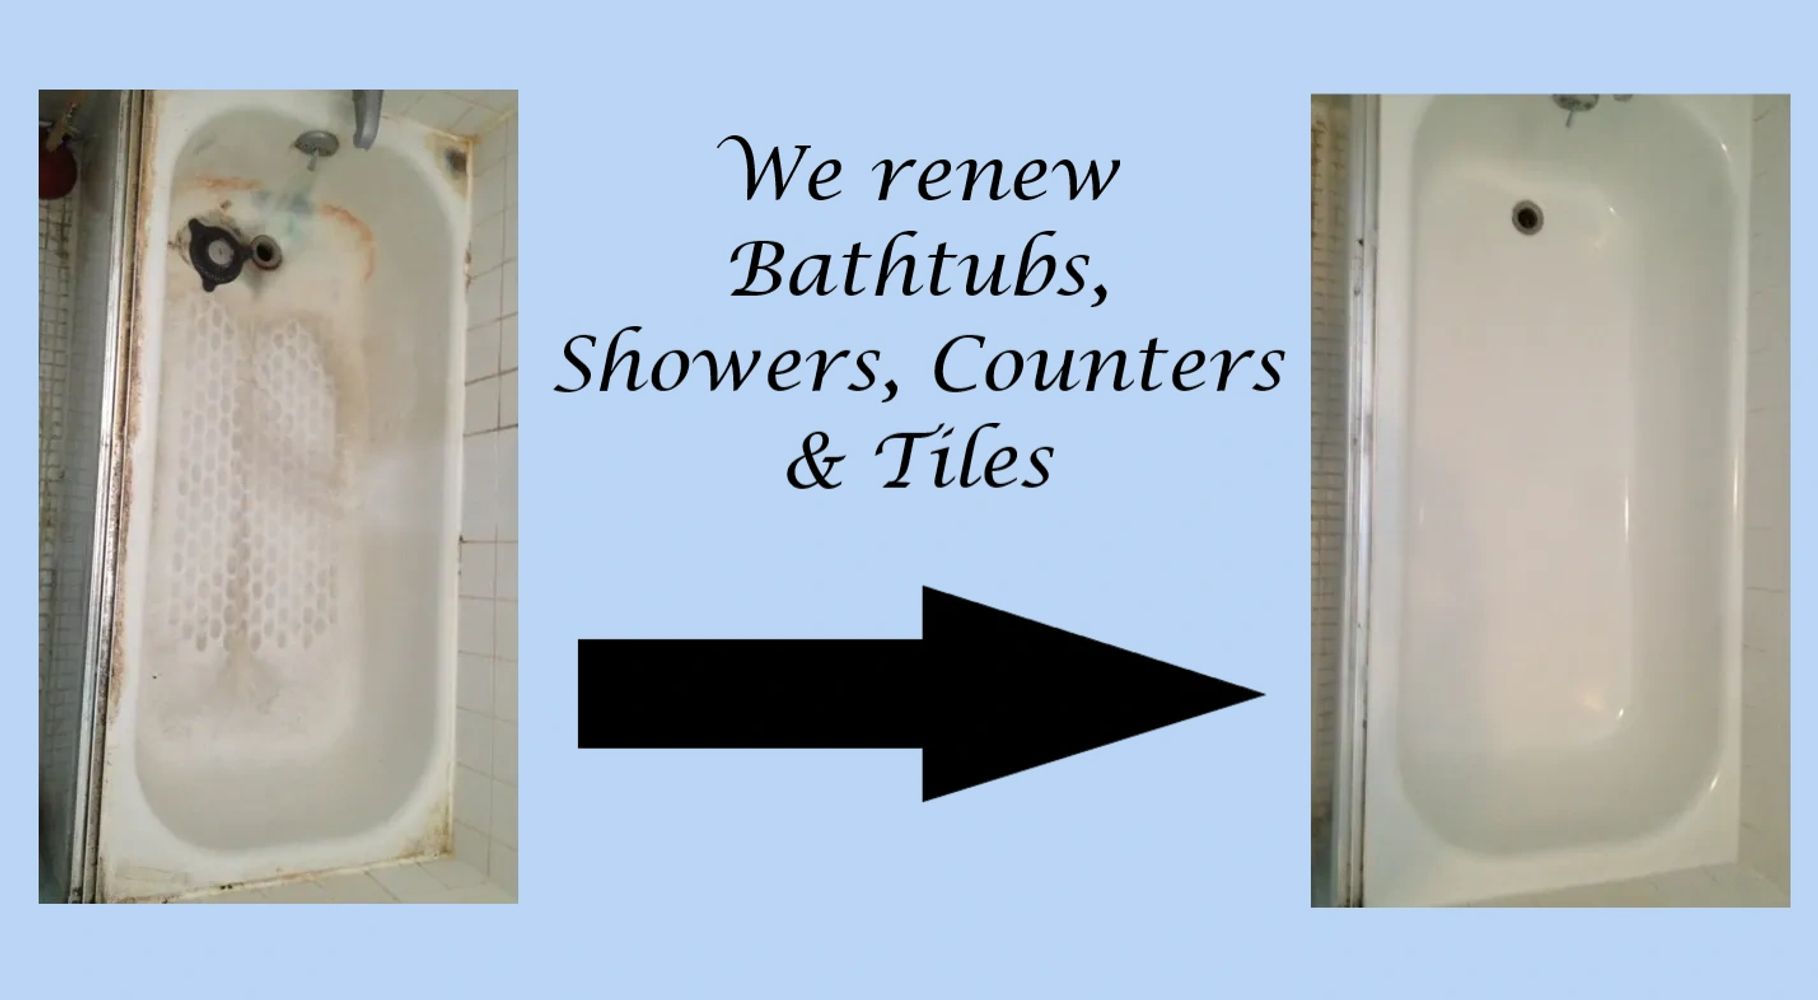 We renew Bathtubs, Showers, Counters & Tiles